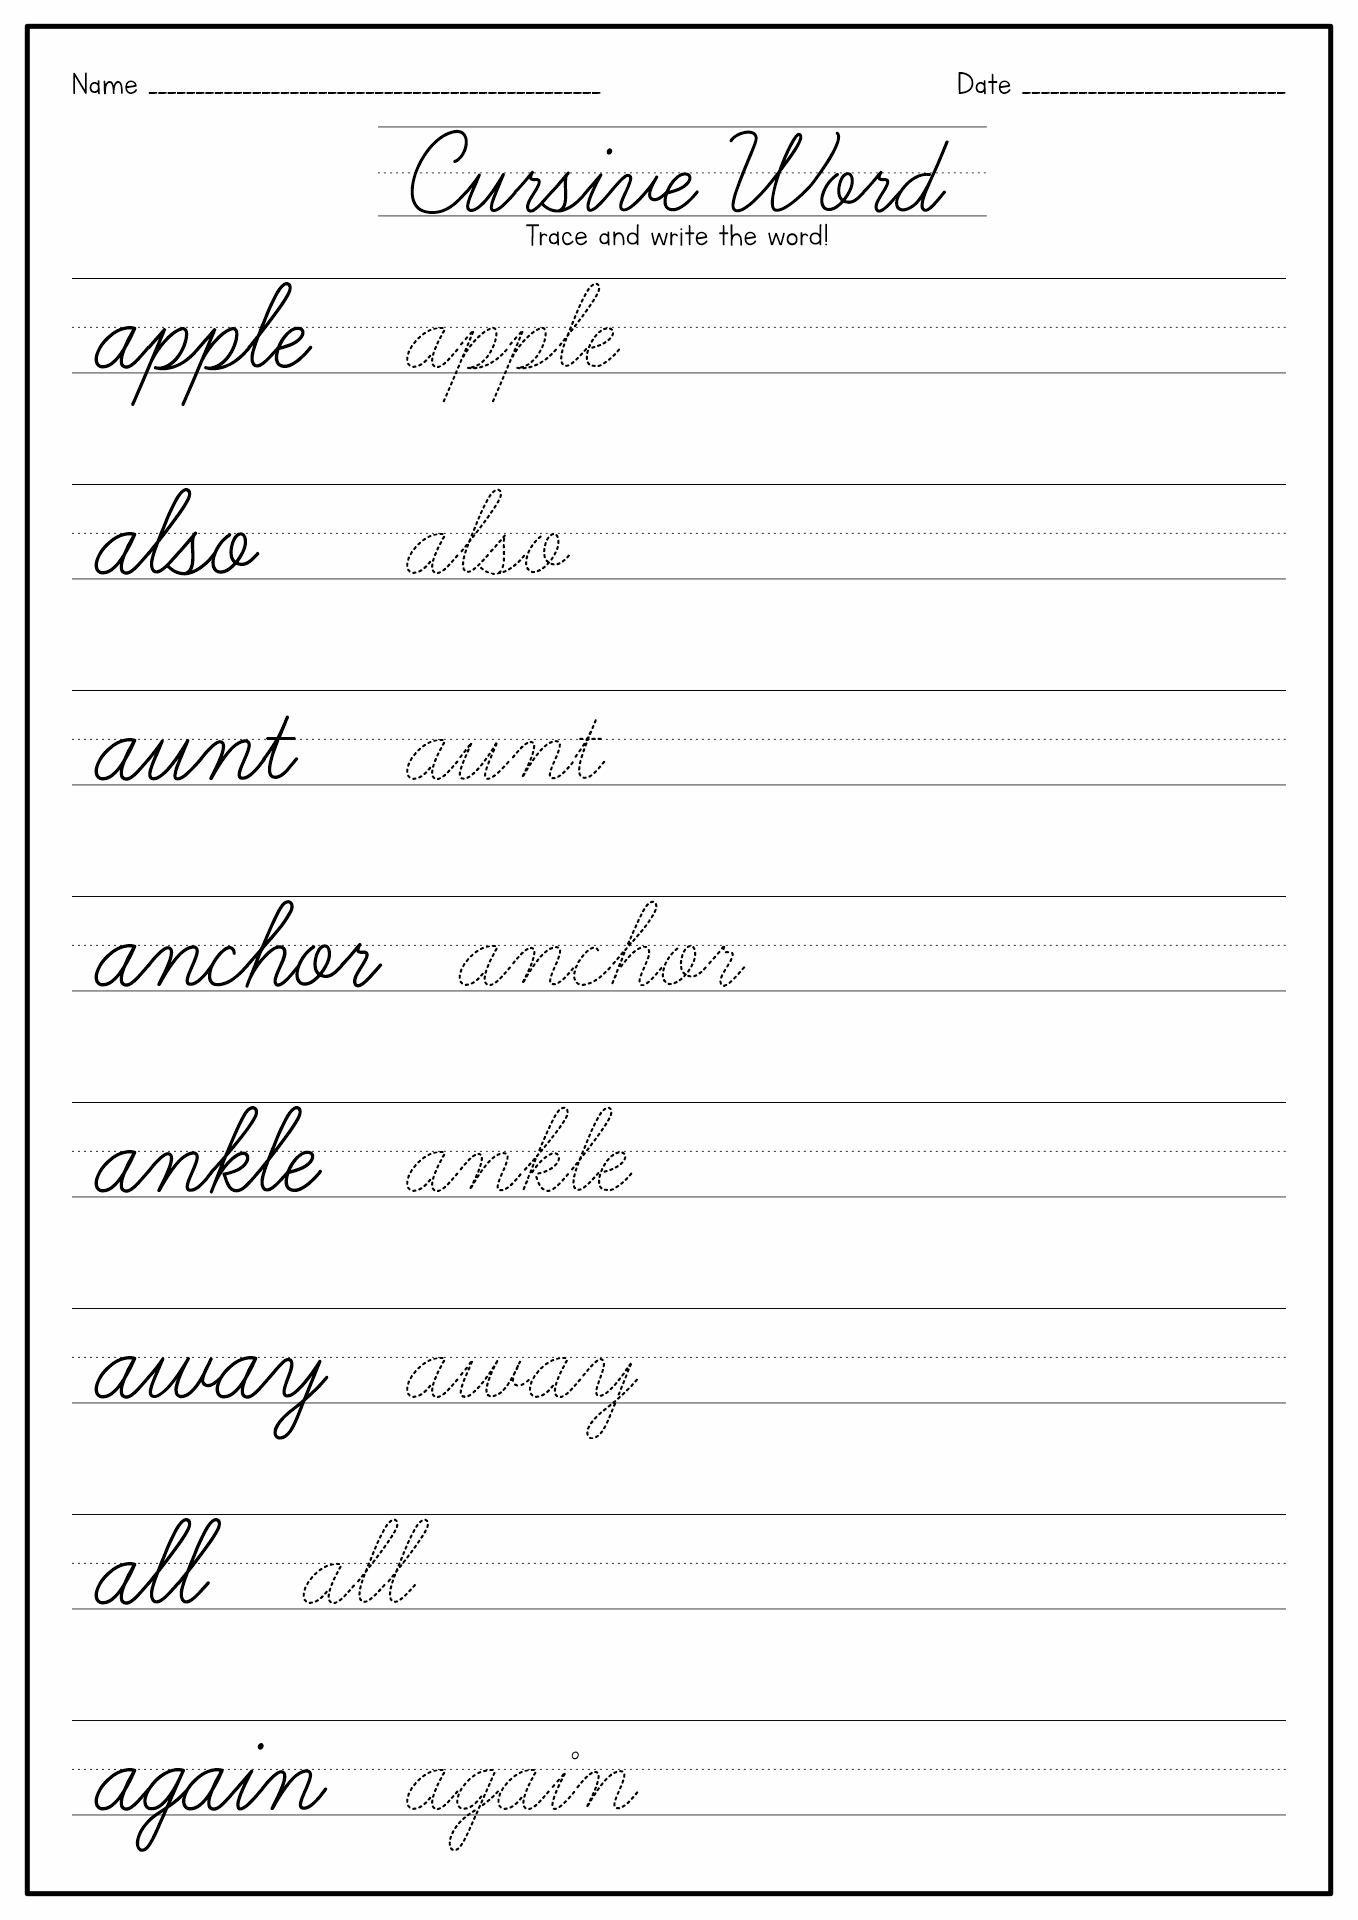 Cursive Writing Words Worksheets Image